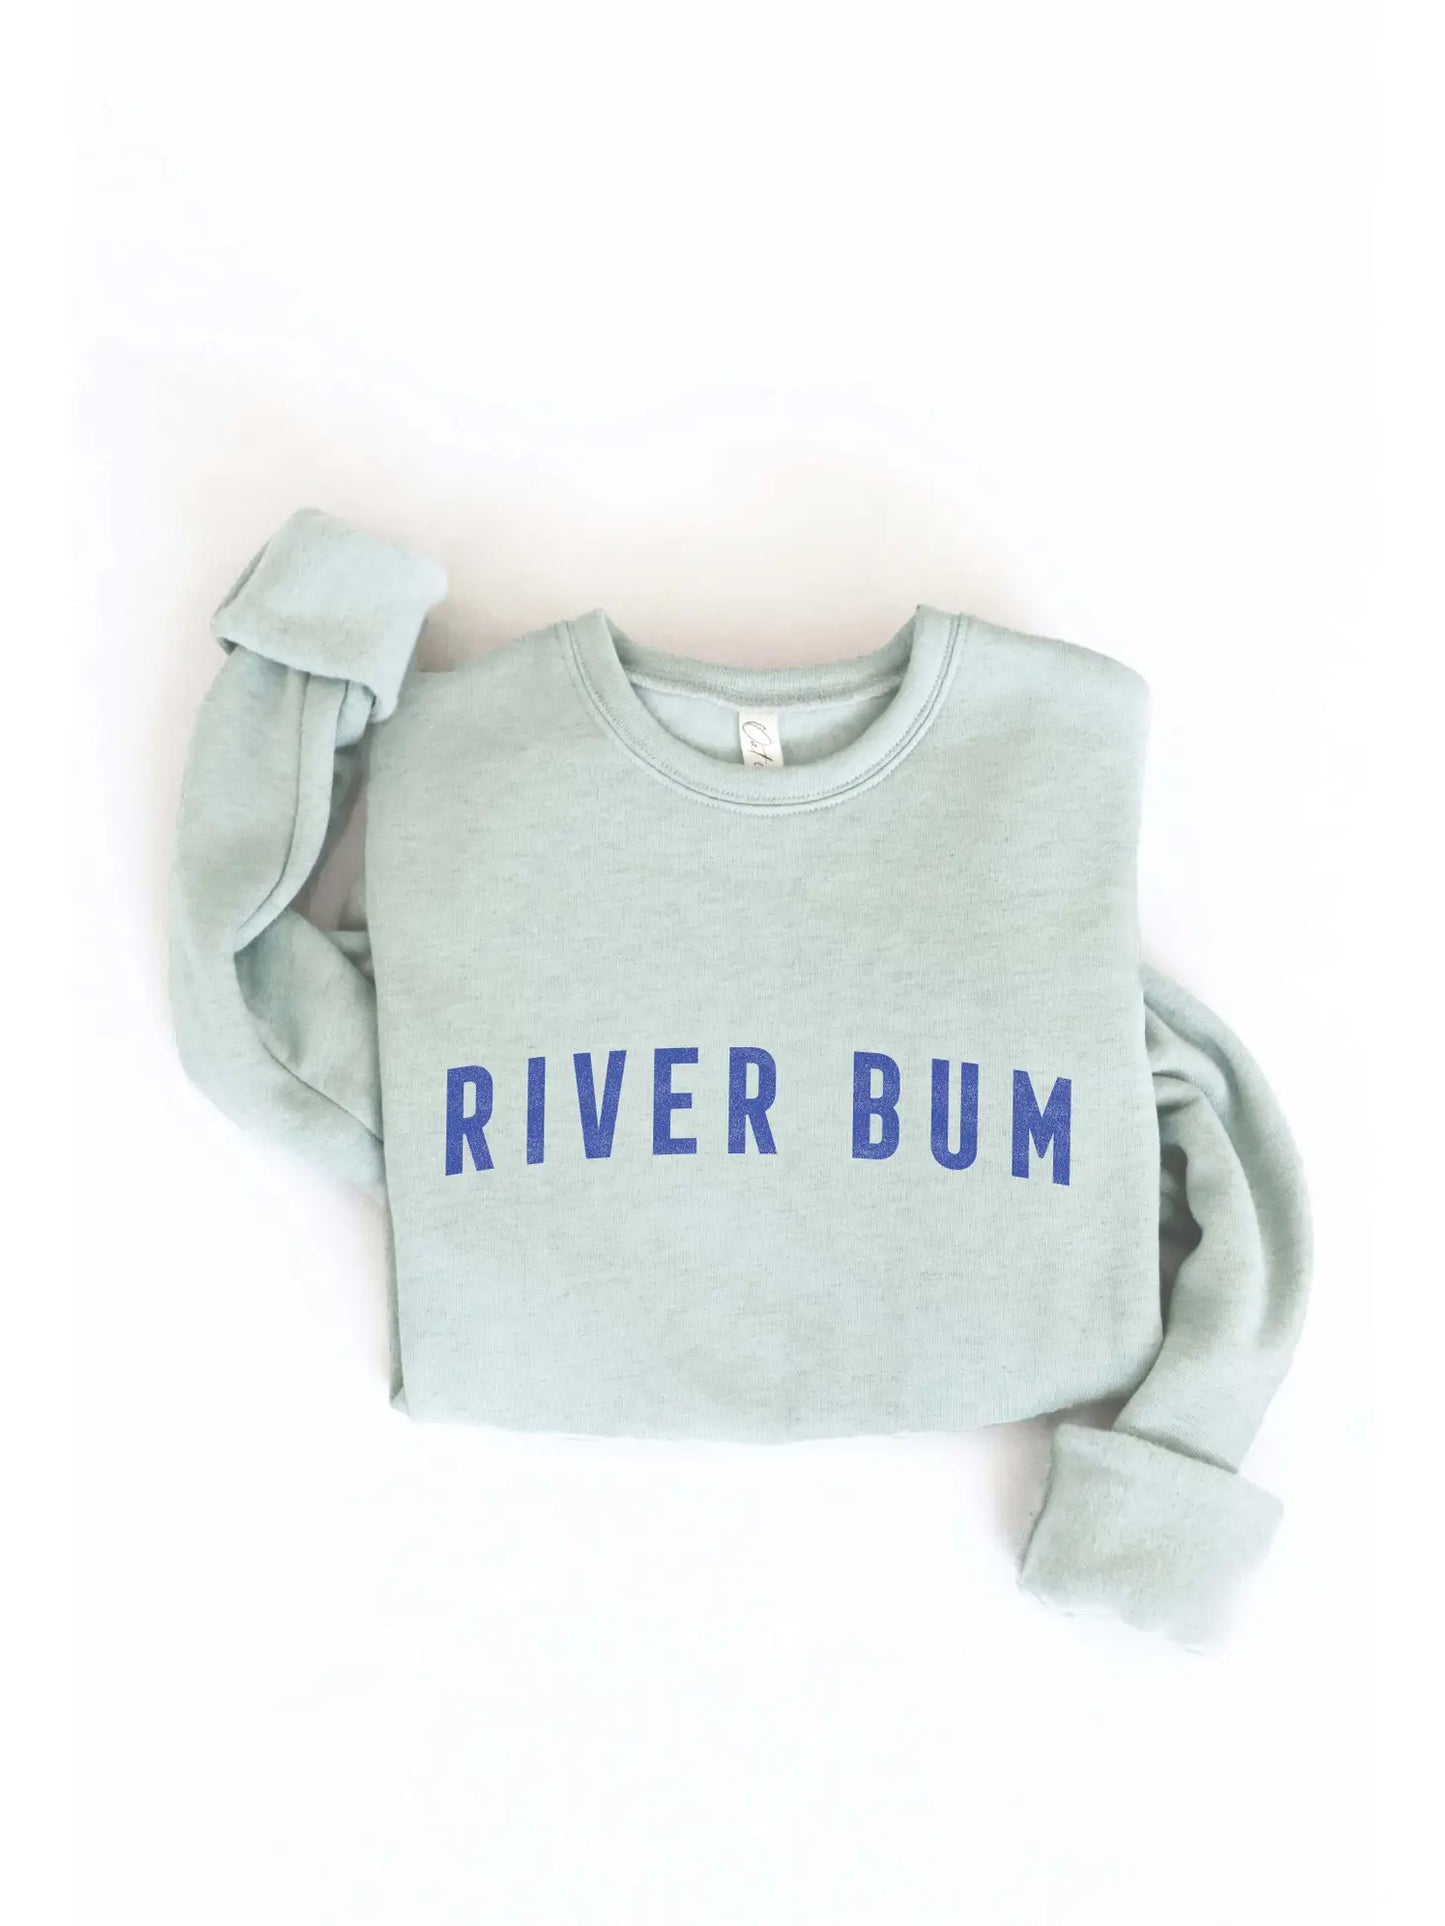 RIVER BUM Graphic Sweatshirt - Dusty Sage